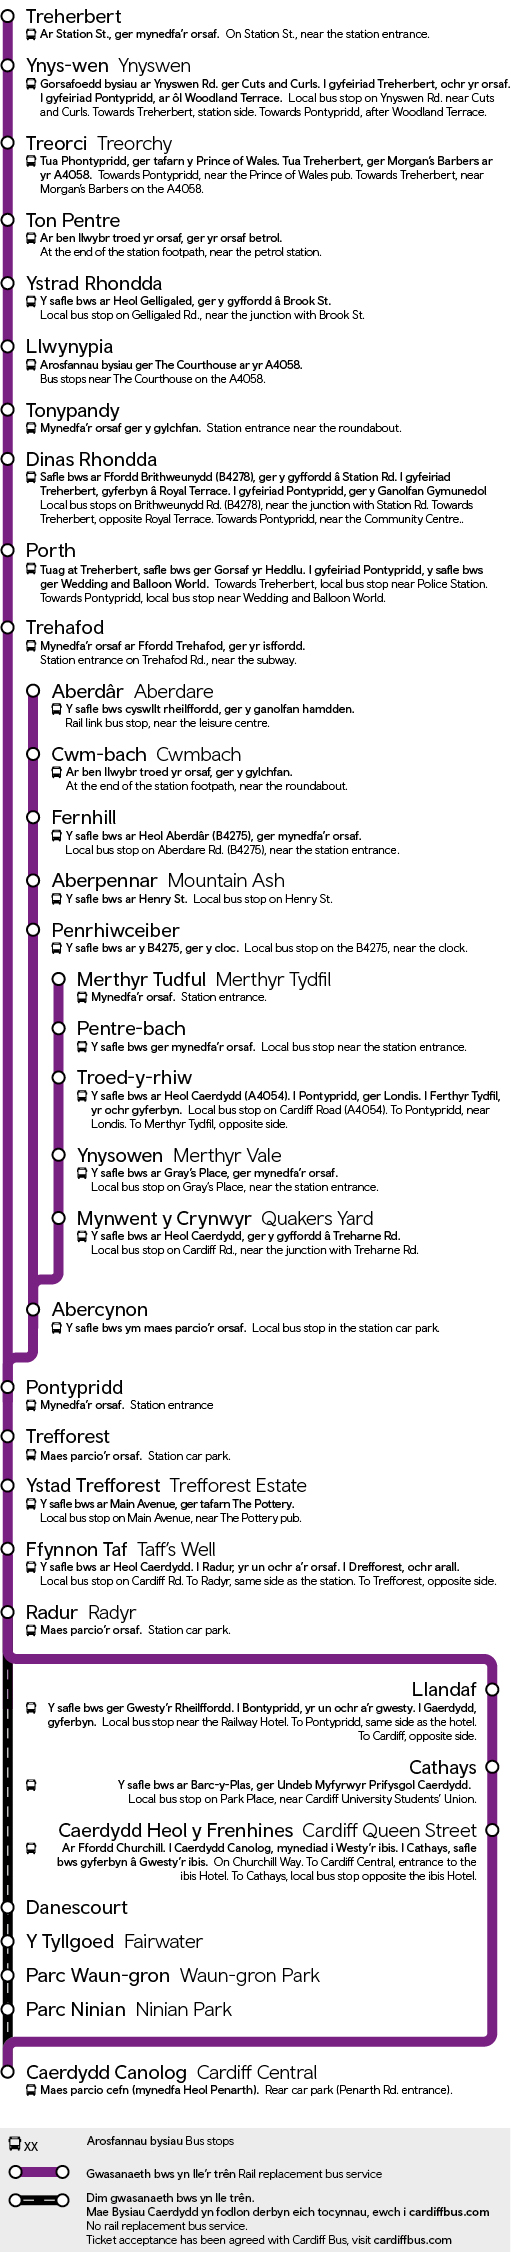 Cardiff Central - Radyr (City line / Coryton line) - Merthyr / Aberdare / Treherbert